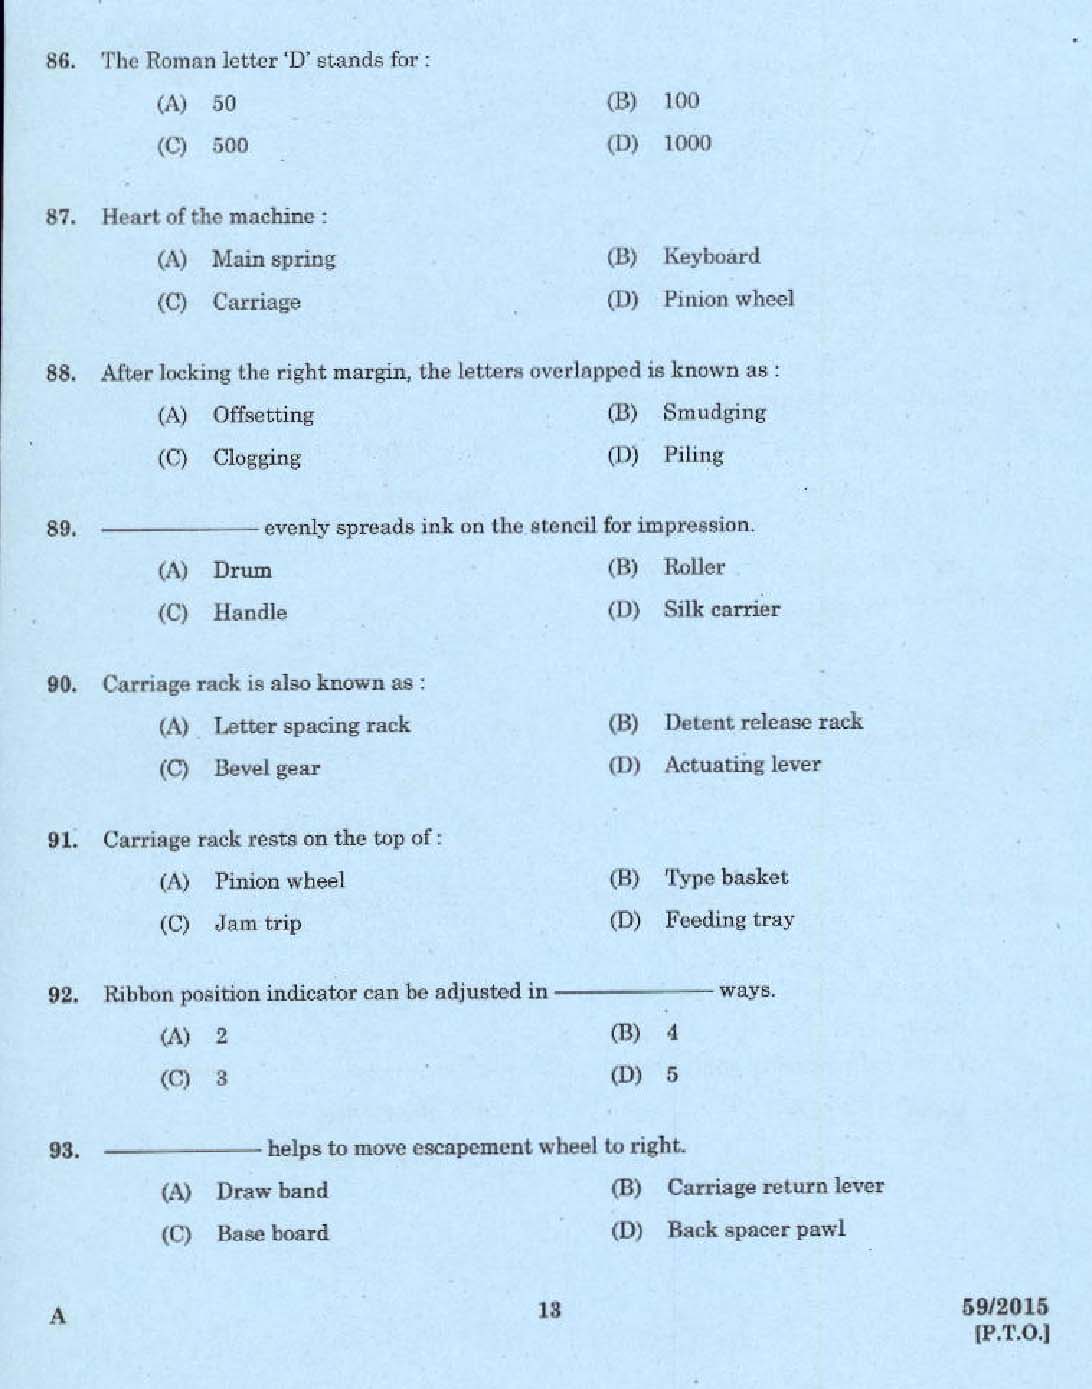 Kerala PSC Malayalam Stenographer Exam 2015 Question Paper Code 592015 11